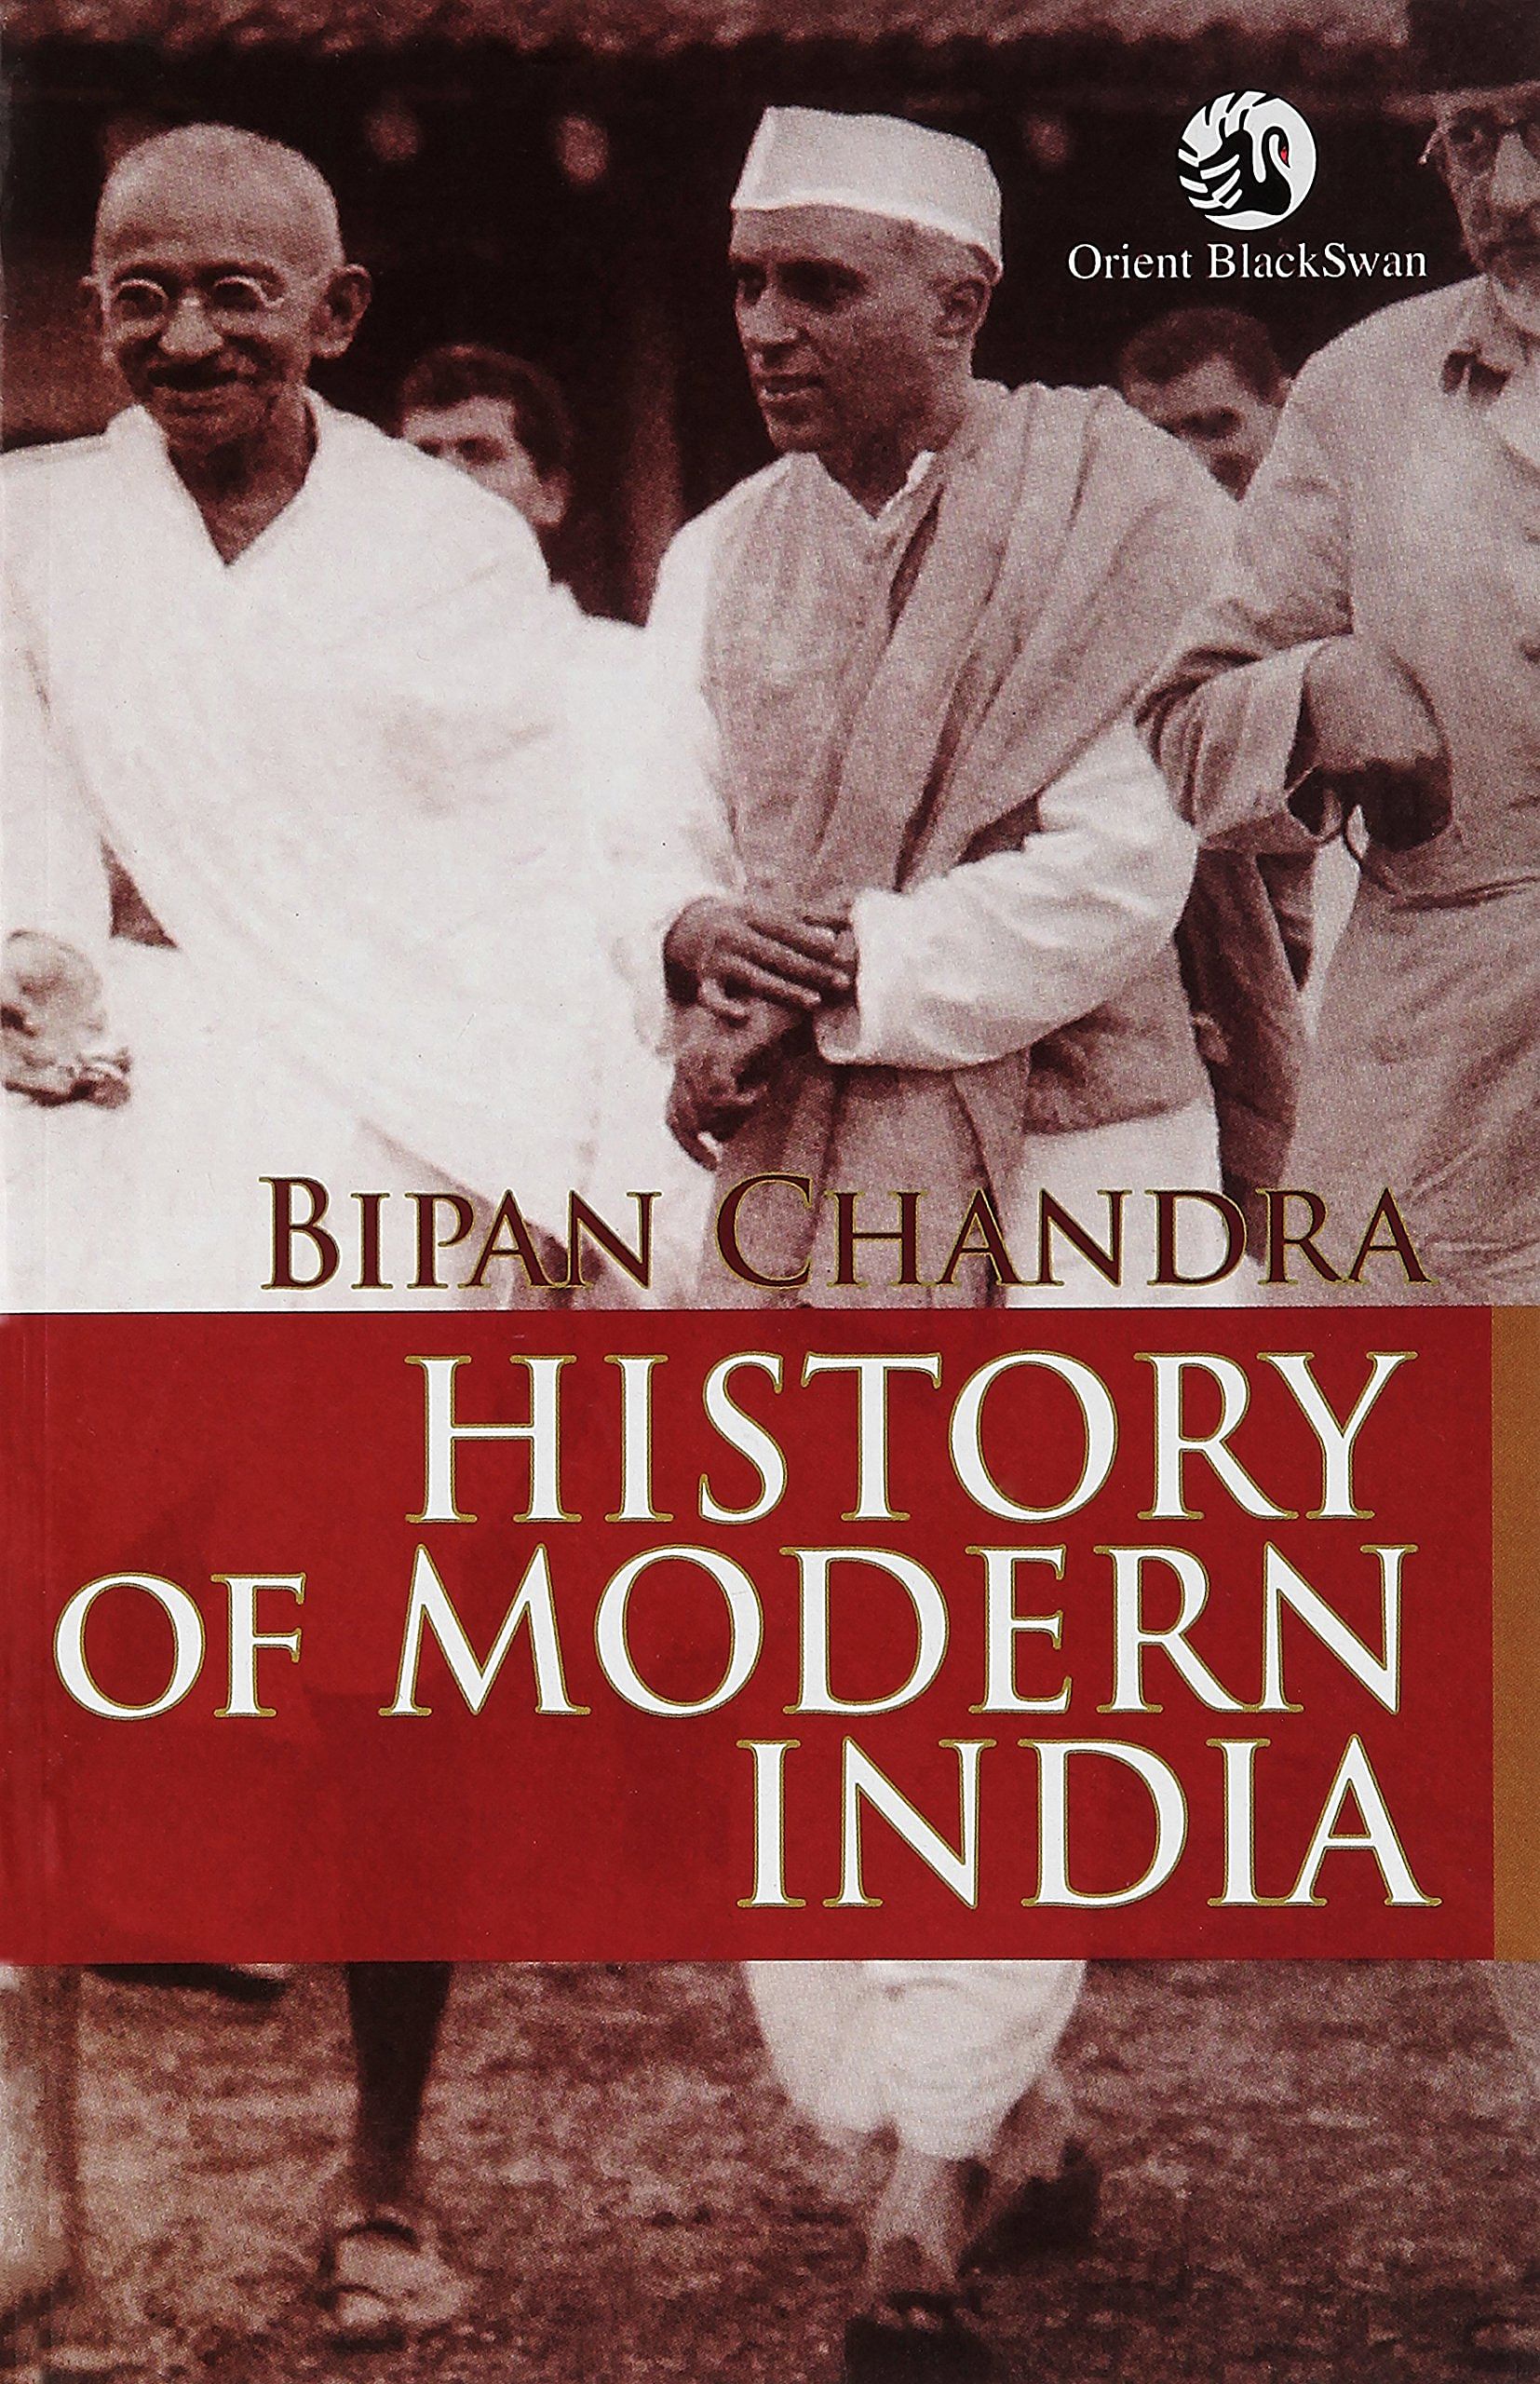 Modern India by Bipan Chandra